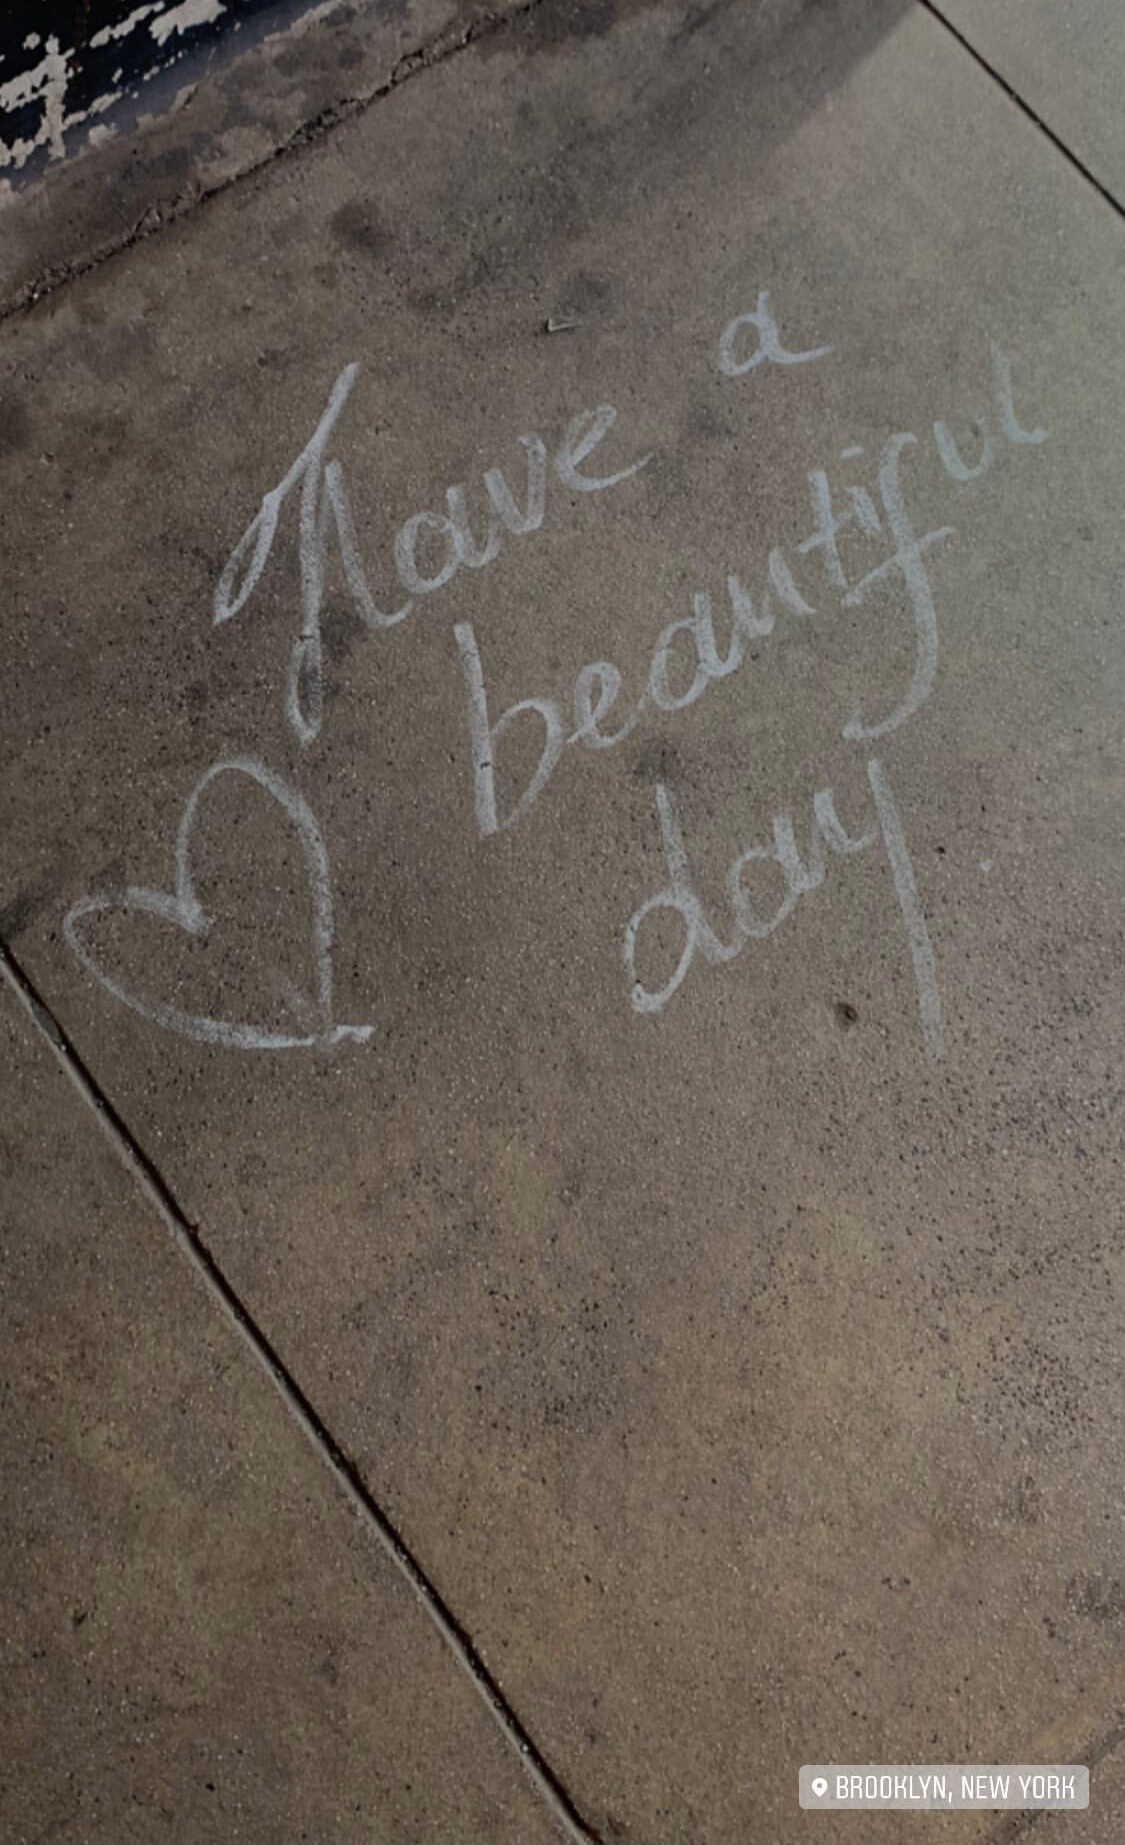 “Have a beautiful day” written on a sidewalk in chalk.